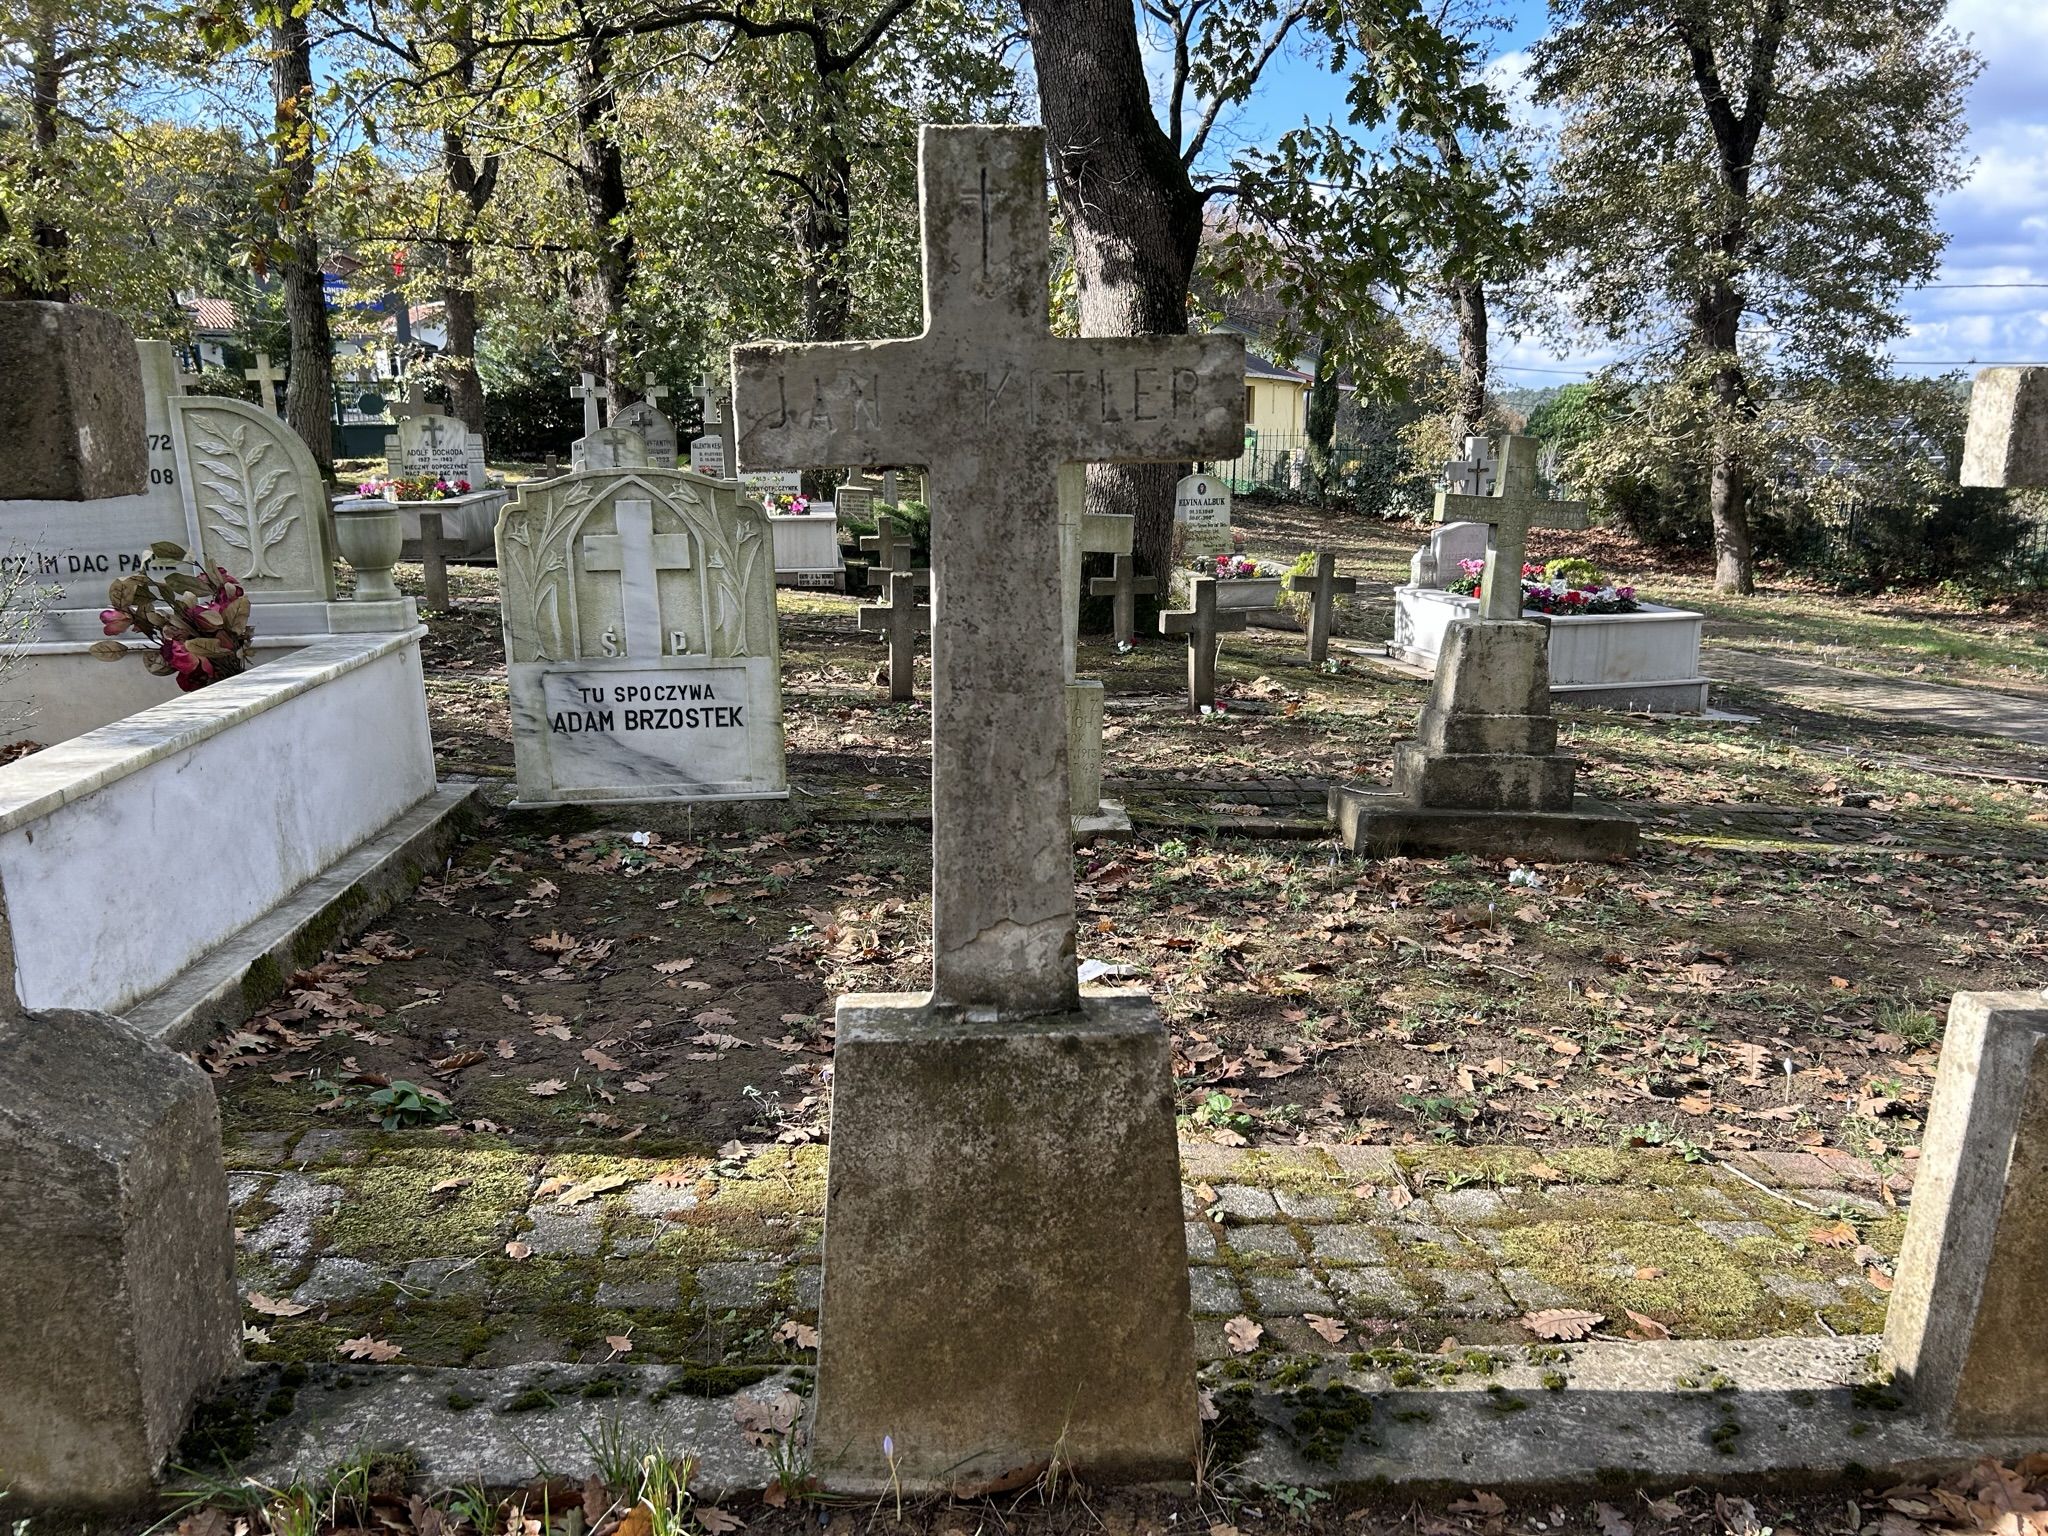 Tombstone of Jan Kitler, Catholic cemetery in Adampol